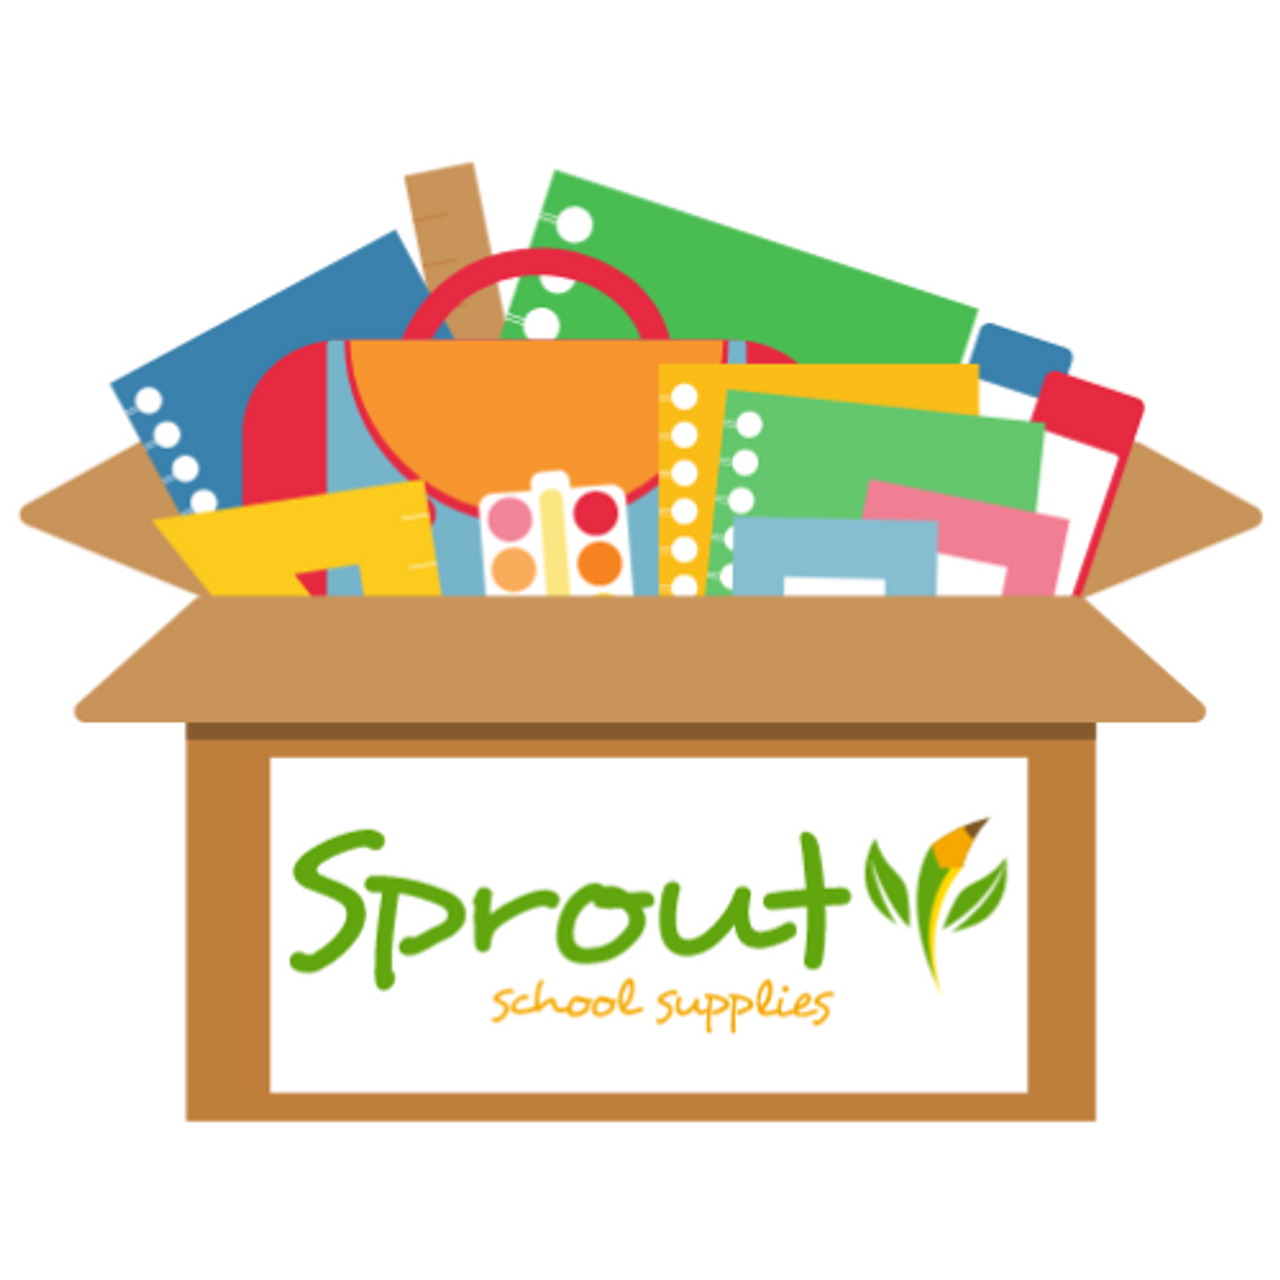 Beverly Woods Elementary School - Grades 3 - 5 (Exceptional Children) -  Sprout School Supplies